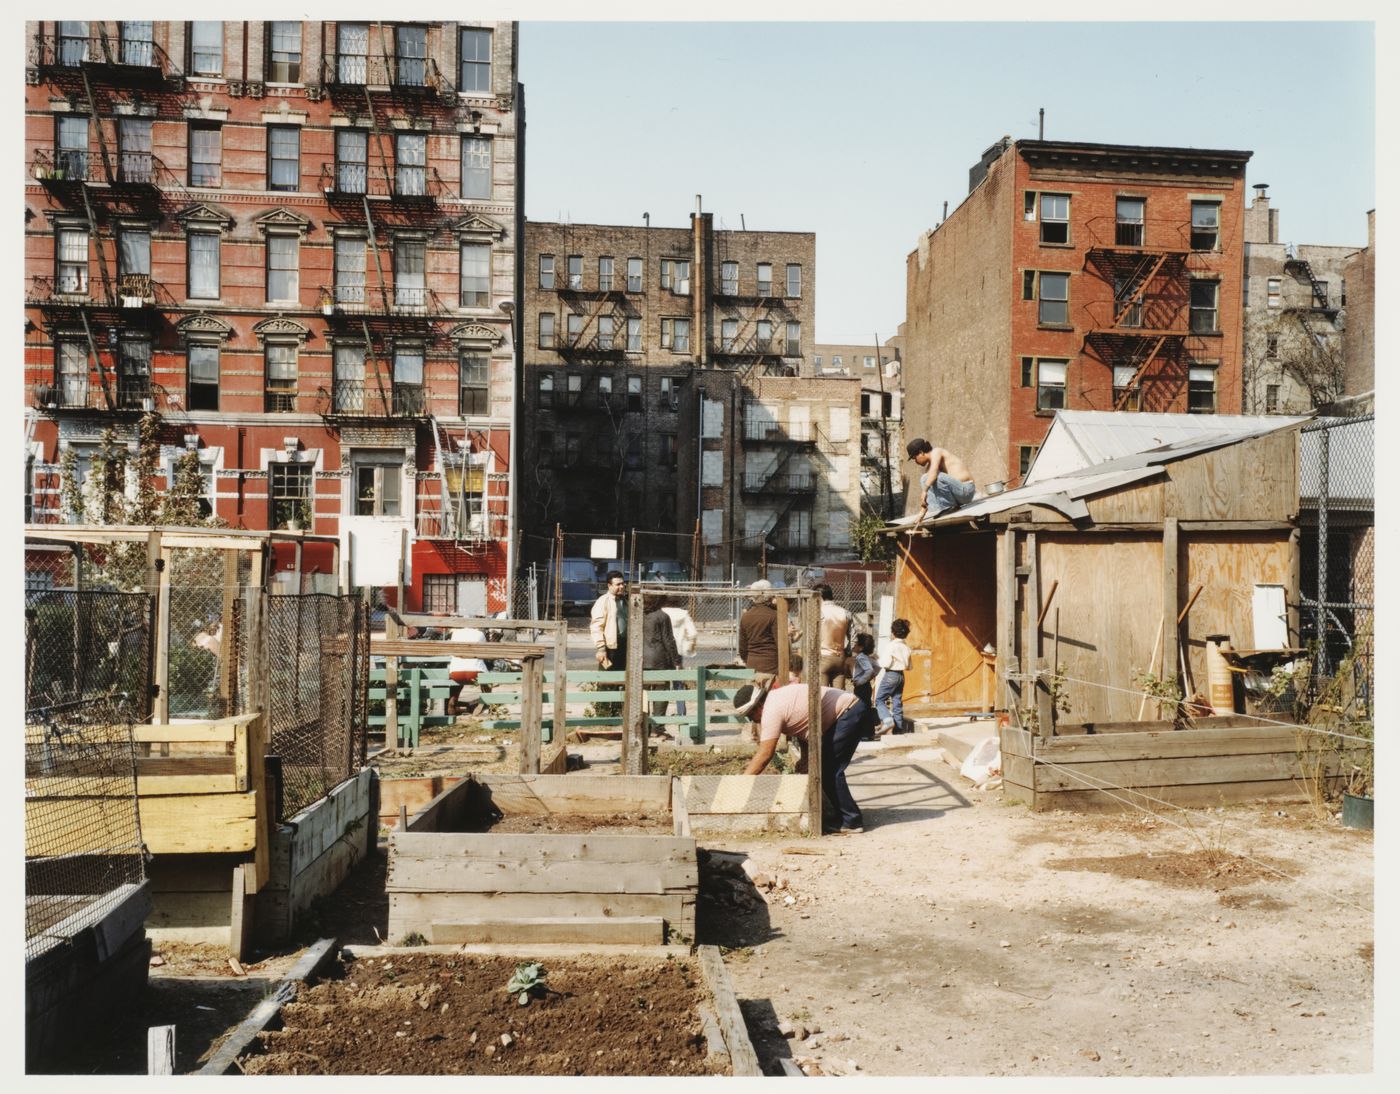 People planting community garden, New York City, New York, United States